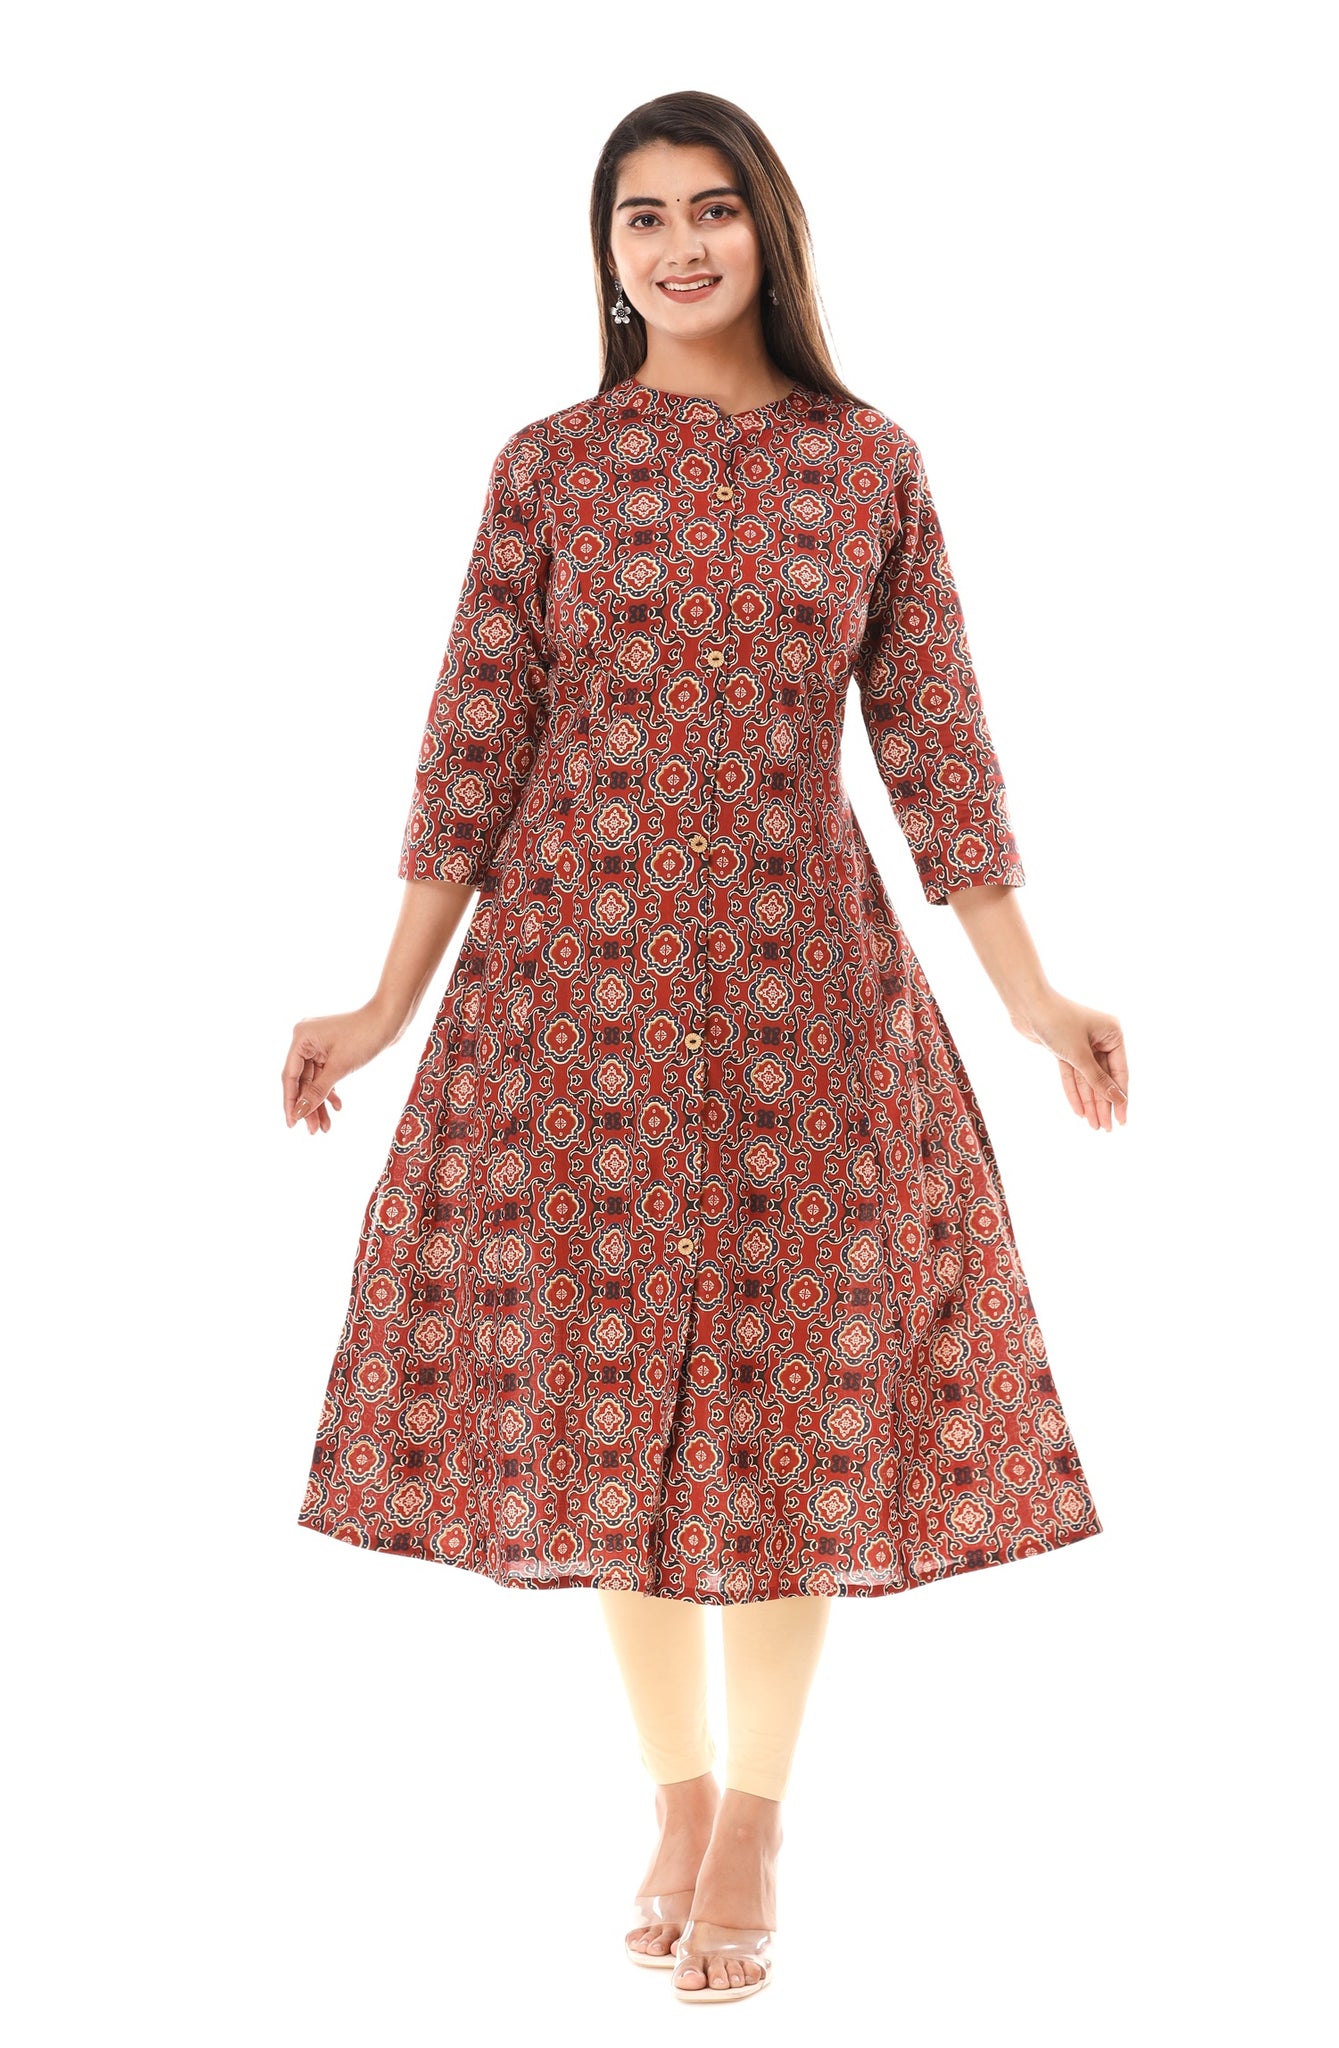 Printed Kurti Designs Check Printing Kurti Design #checkprint #kurti  #latest #Cotton #women #Indian | Indian long dress, Sheath dresses work,  Long dress design